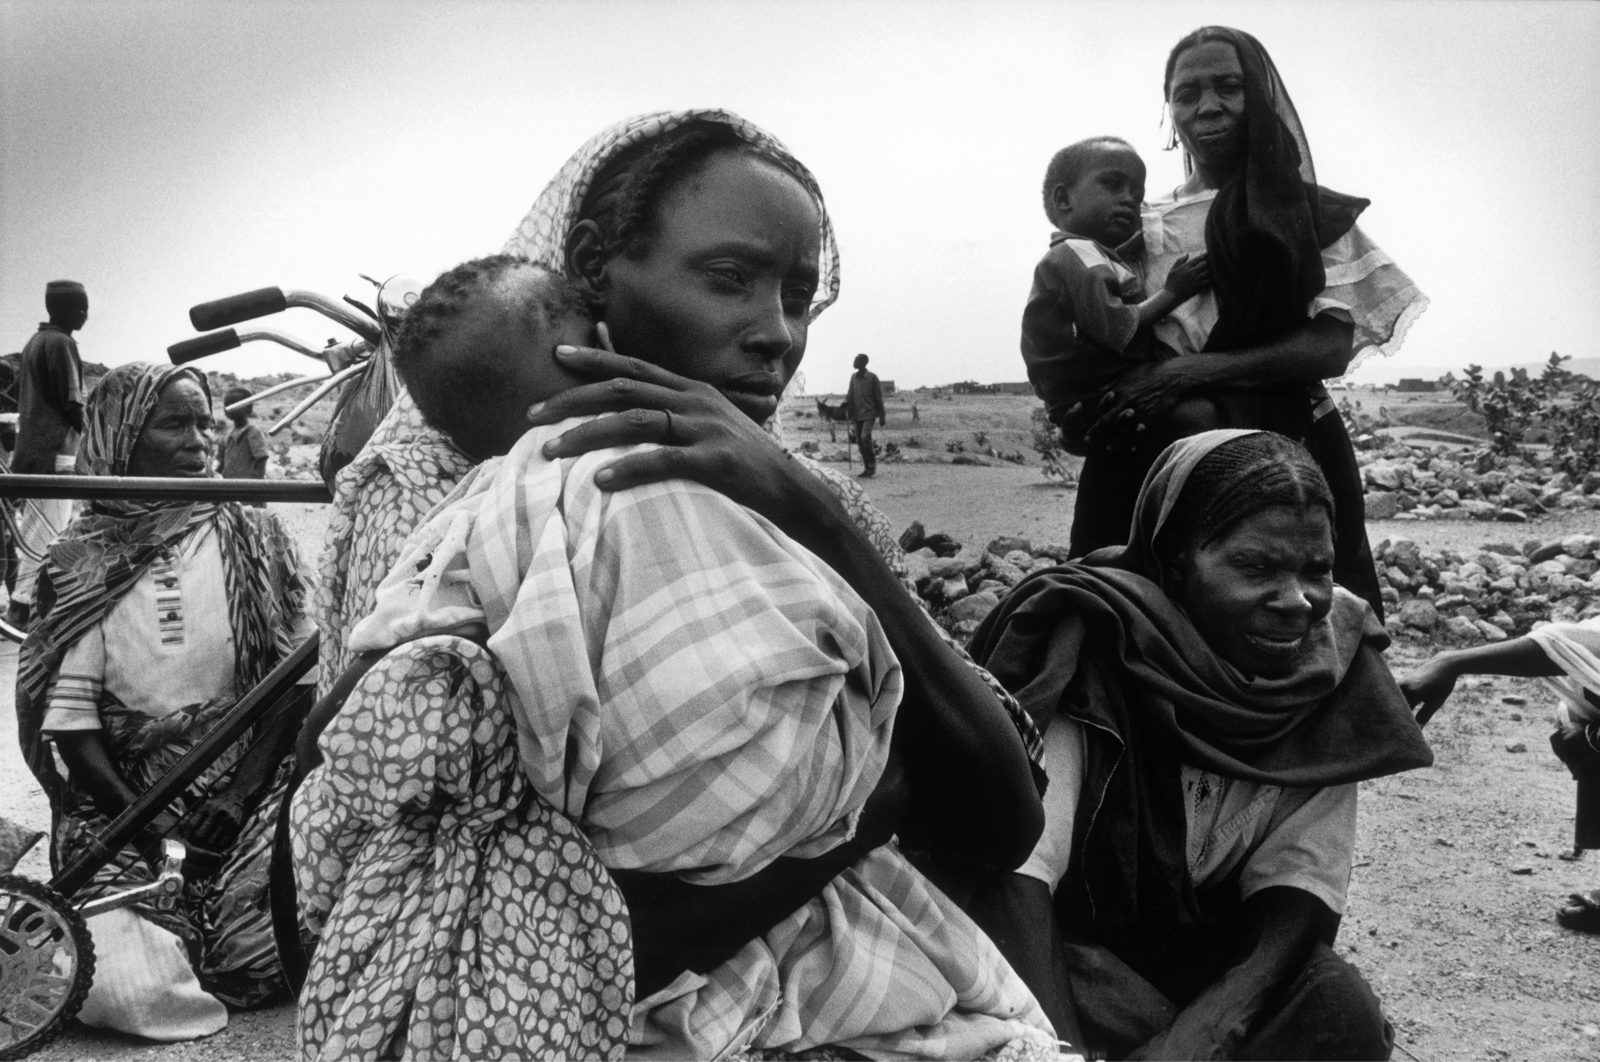 Soudan, 2004